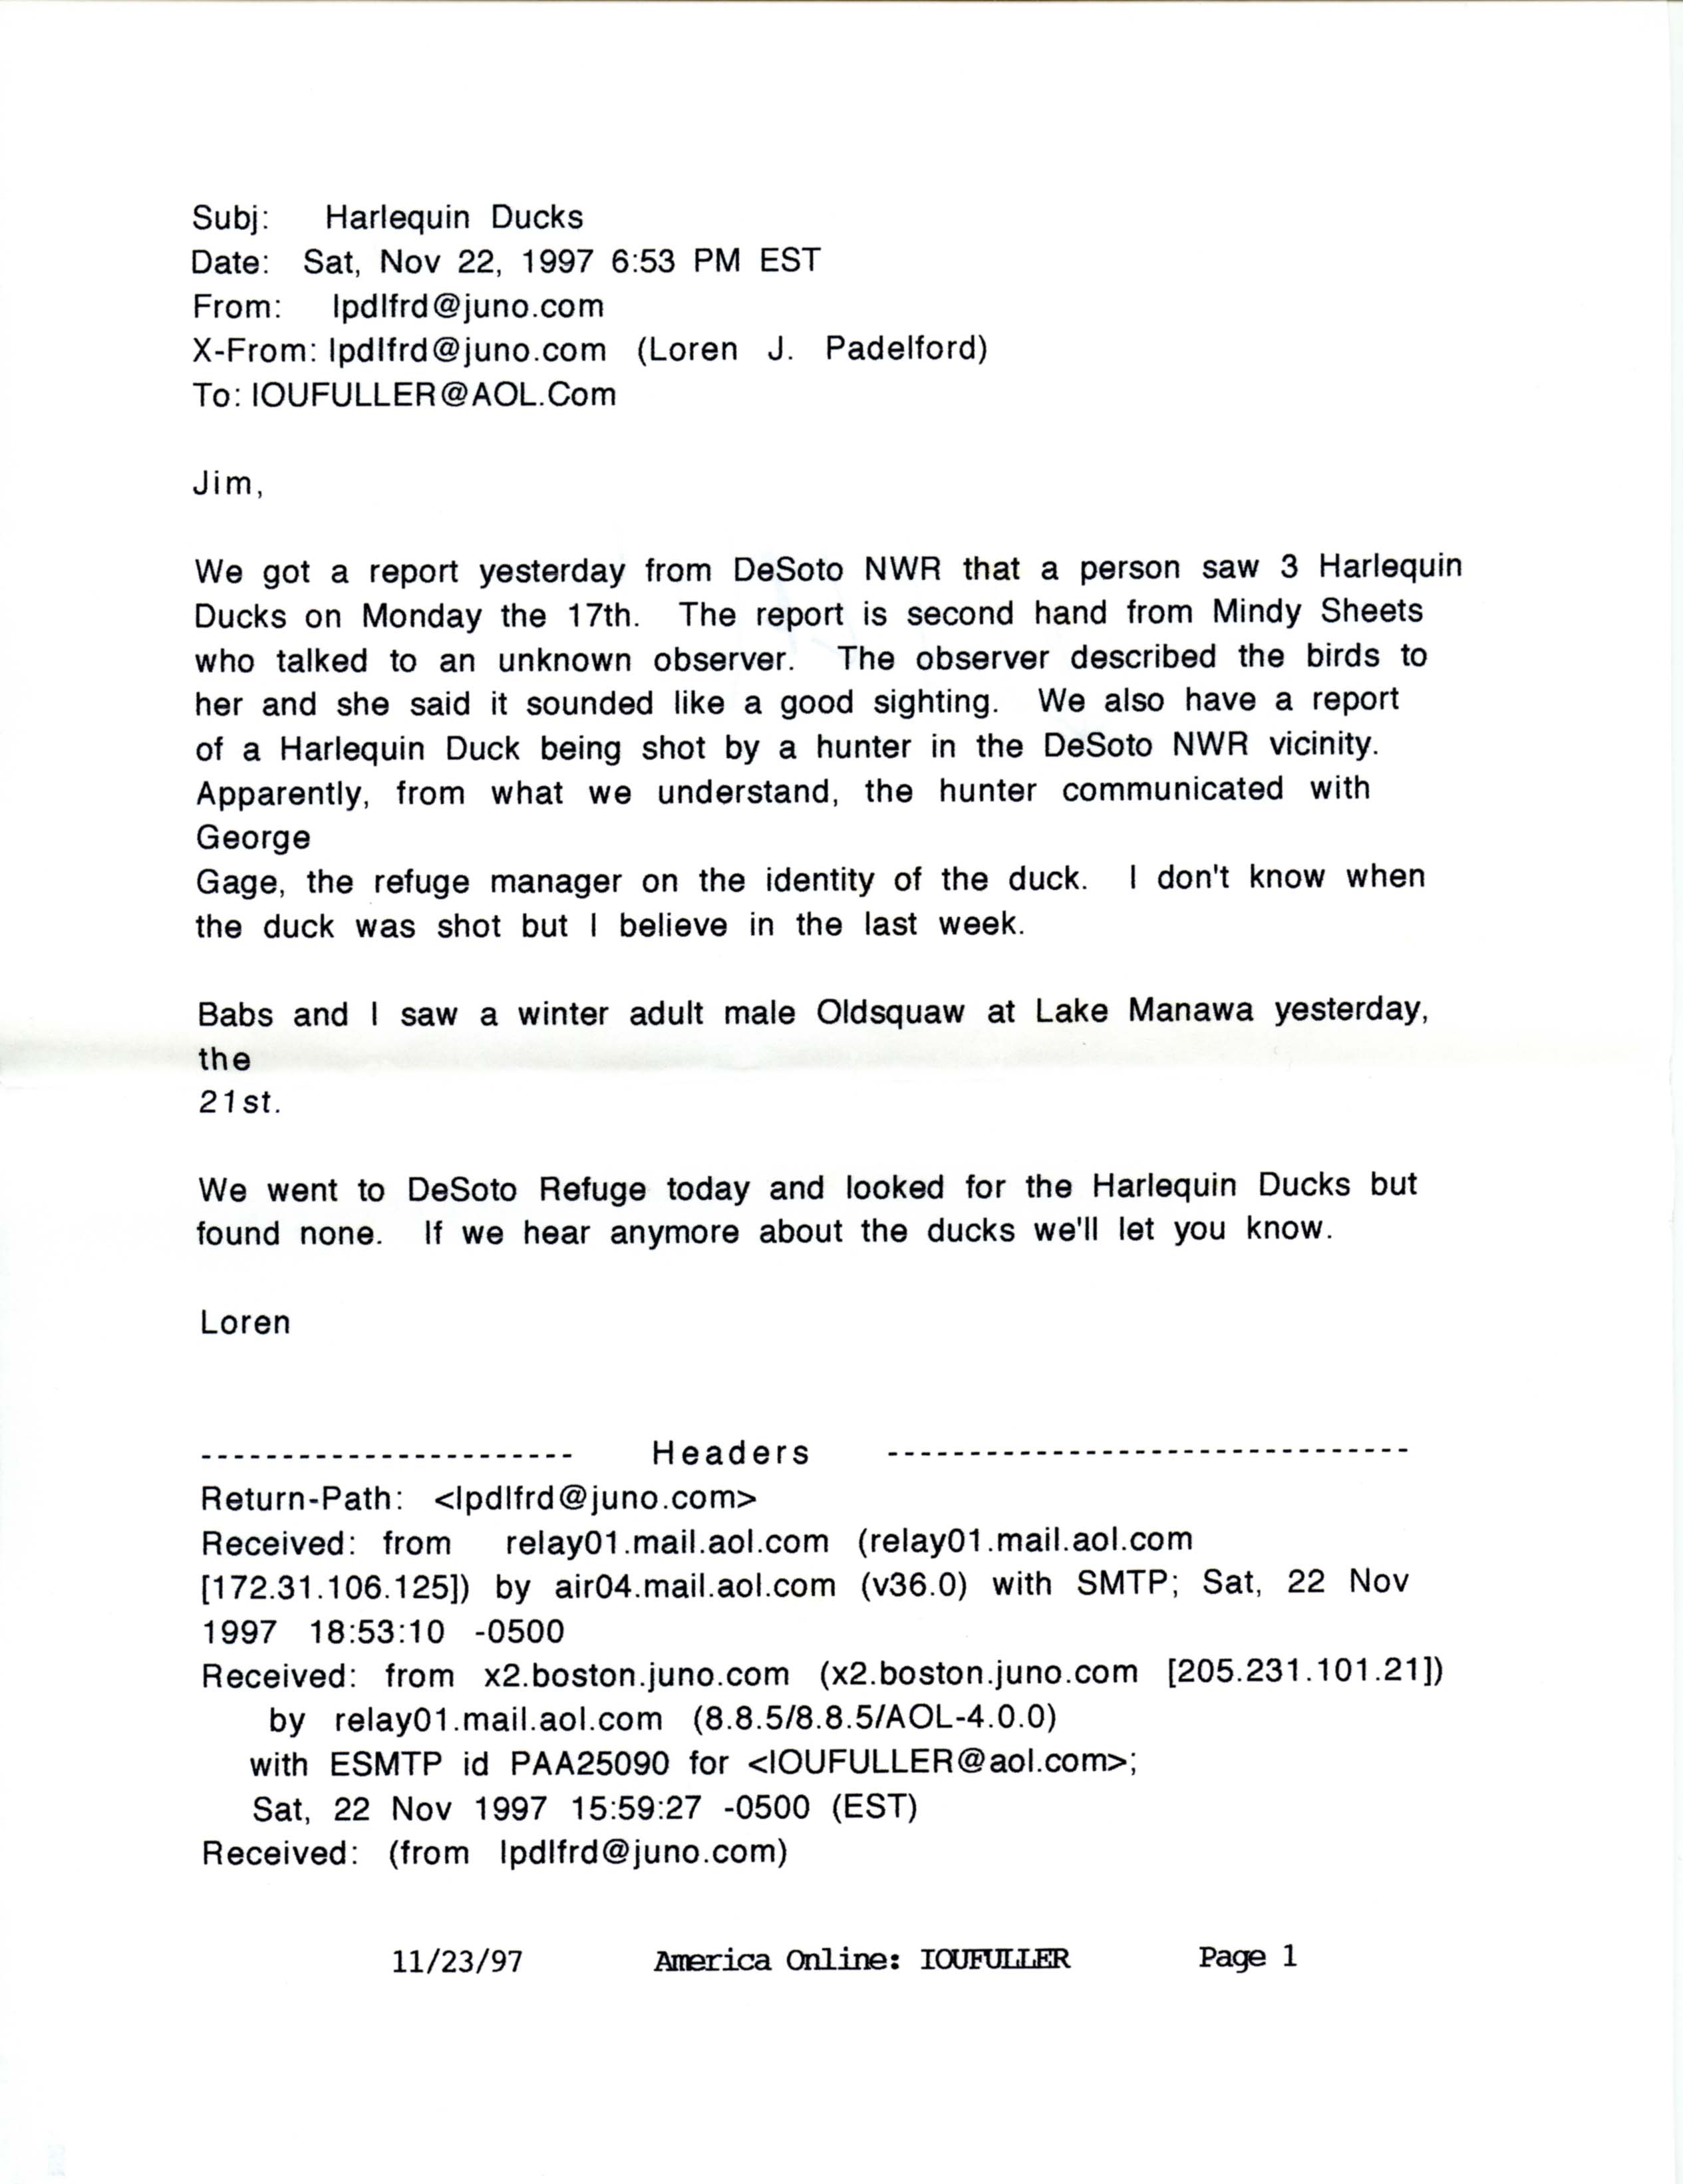 Loren Padelford email to James L. Fuller regarding a Harlequin Duck sighting, November 22, 1997